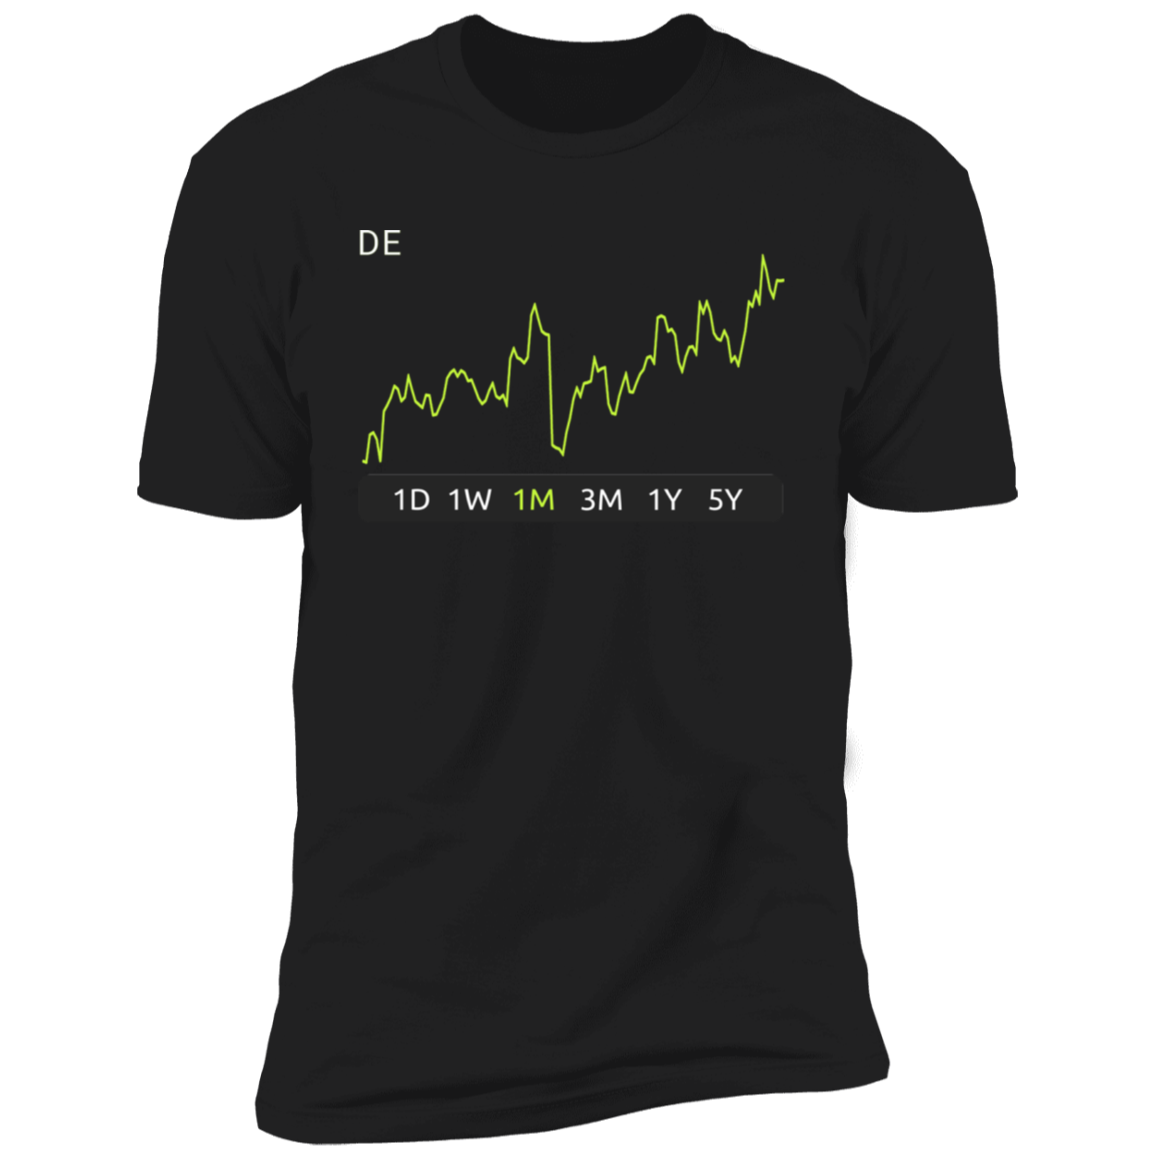 DE Stock 1m Premium T-Shirt